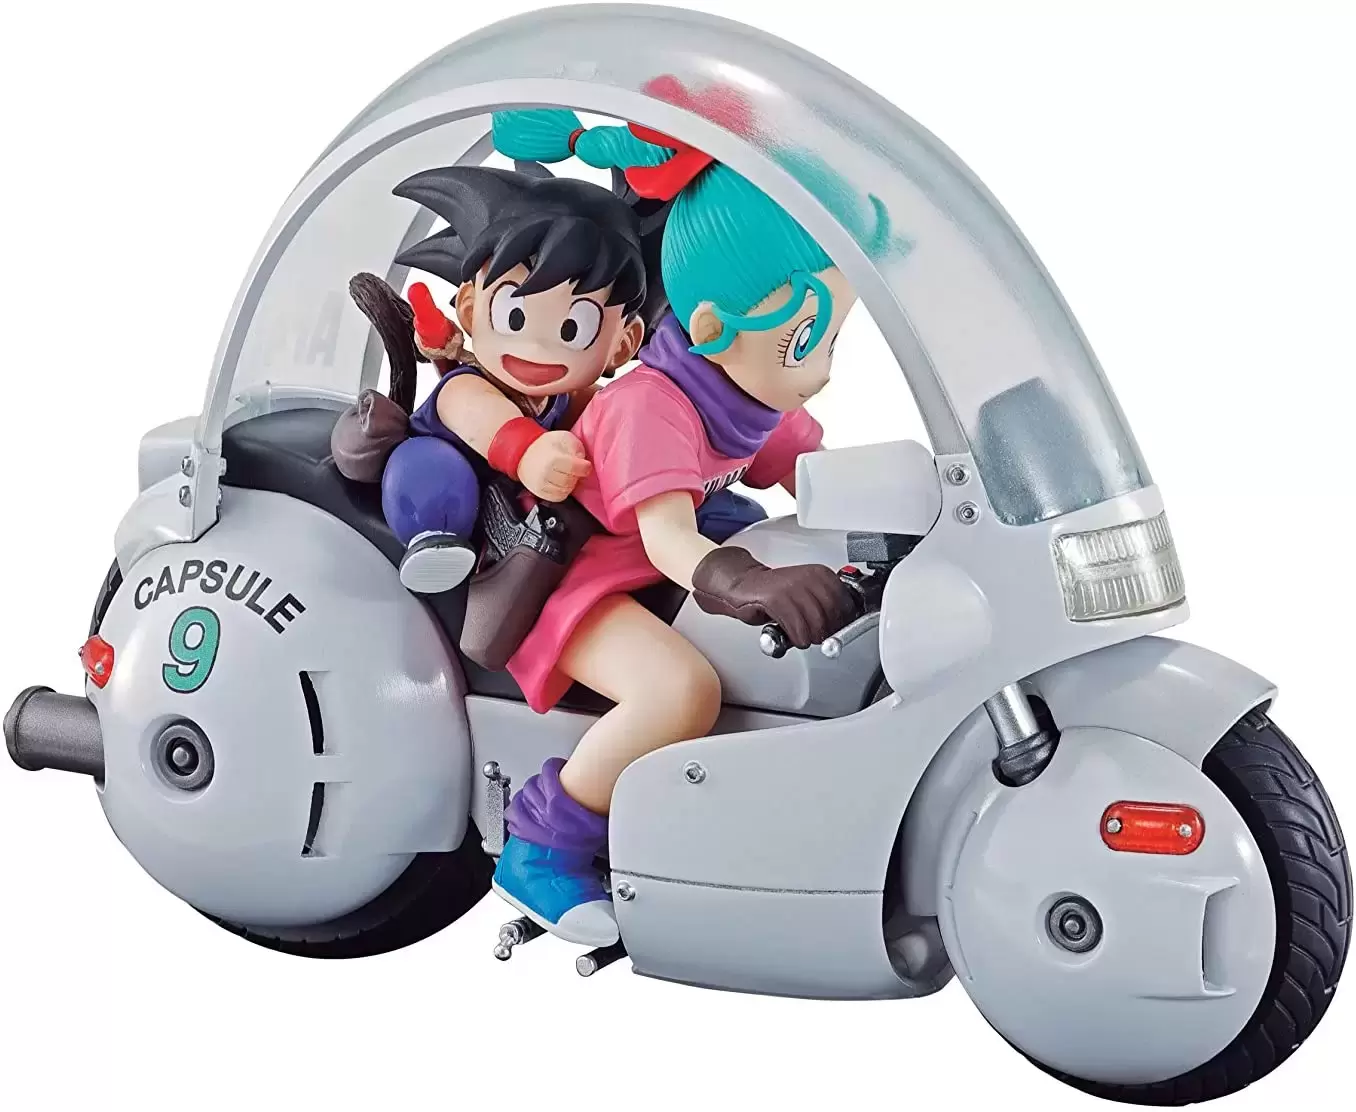 Capsule megahouse - Goku &  Bulma on Capsule 9 Bike